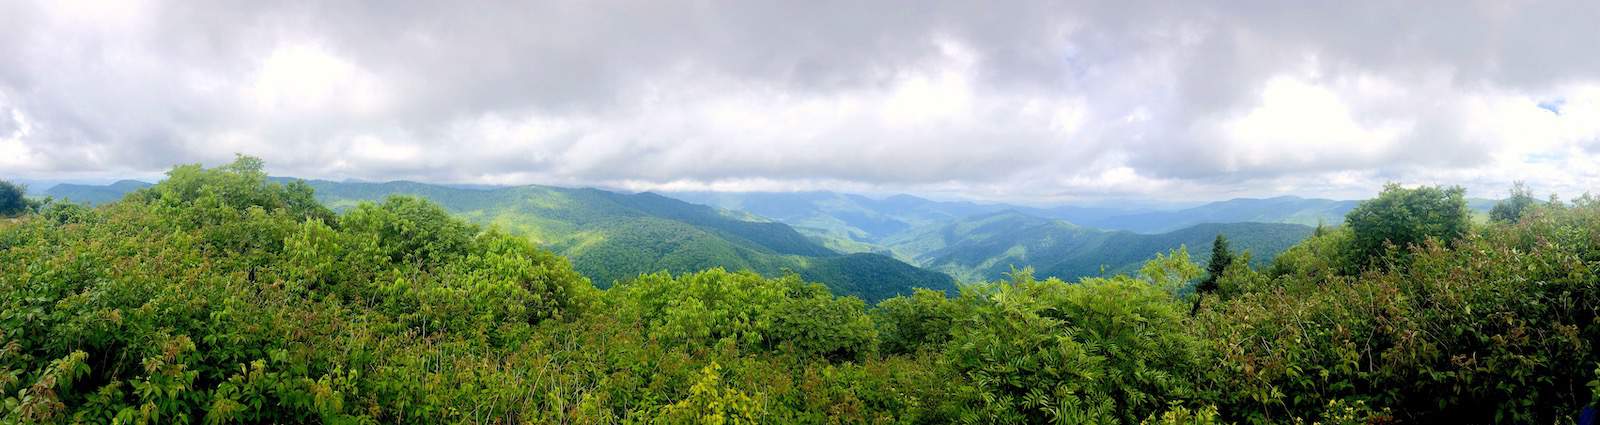 Pisgah National Forest, North Carolina